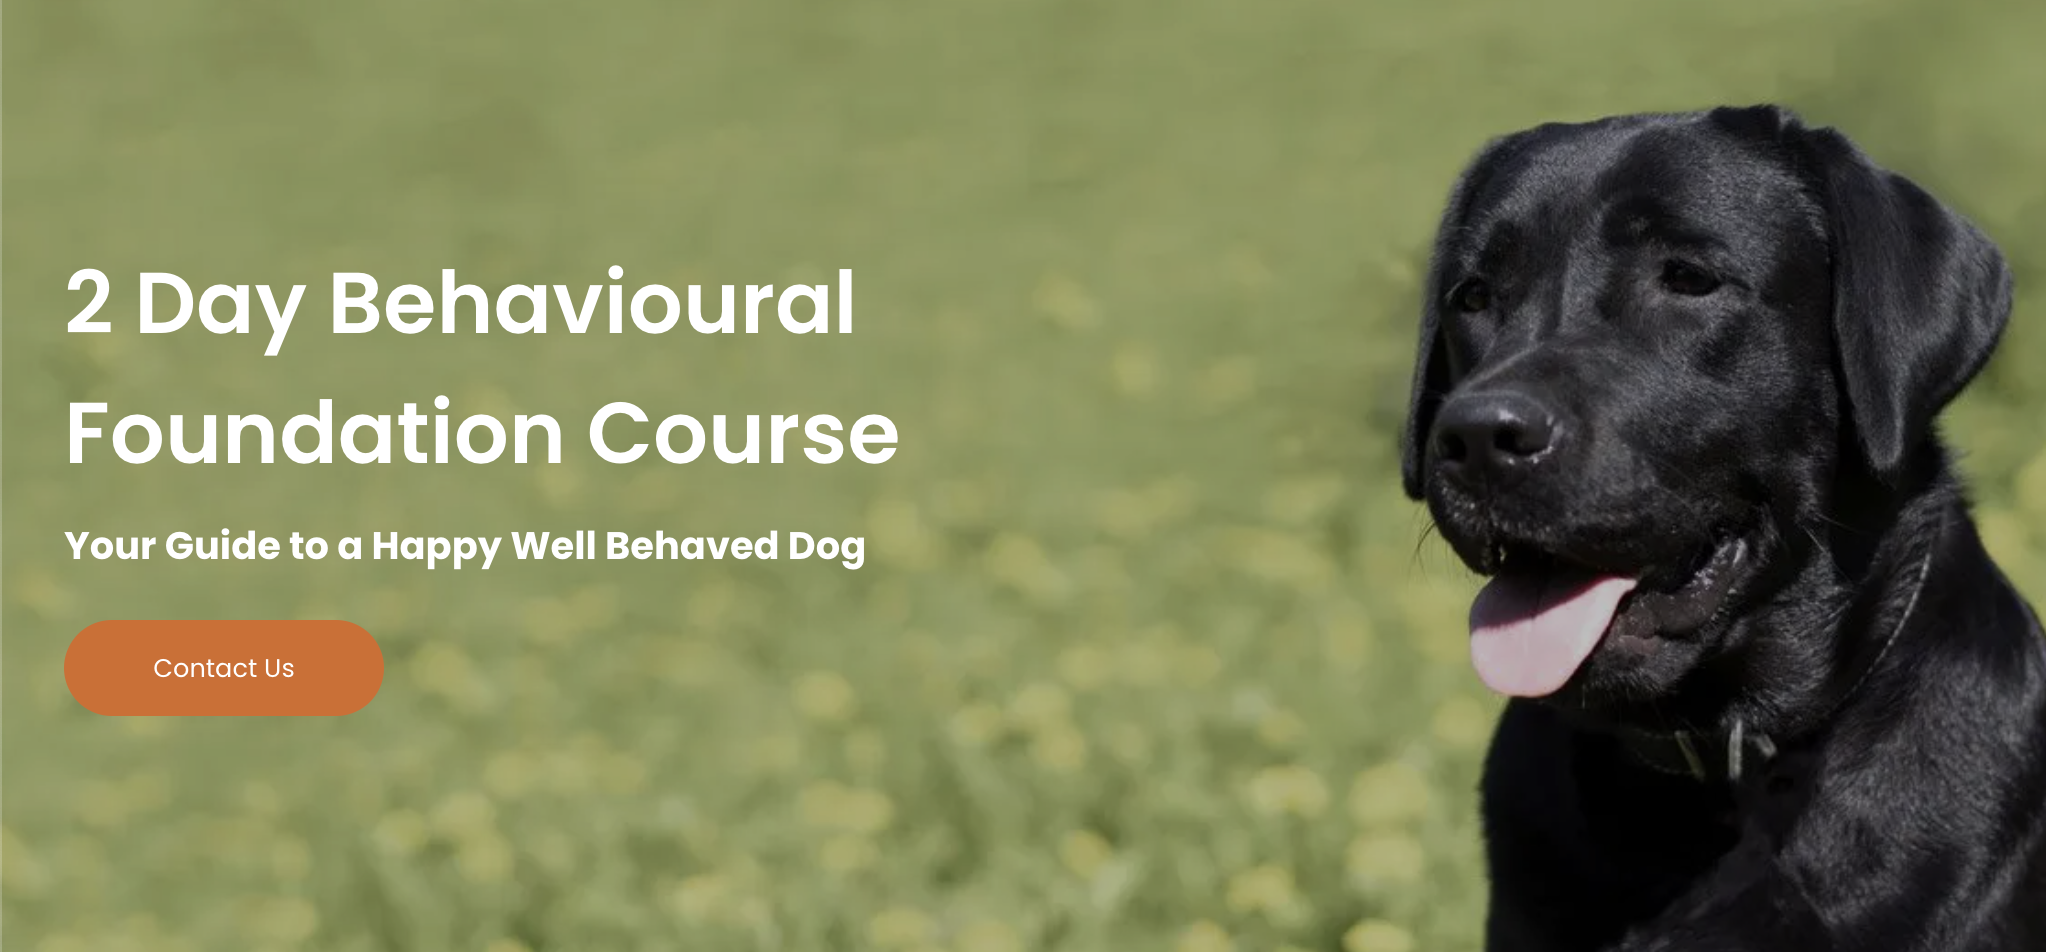 2 Day Behavioural Foundation Course